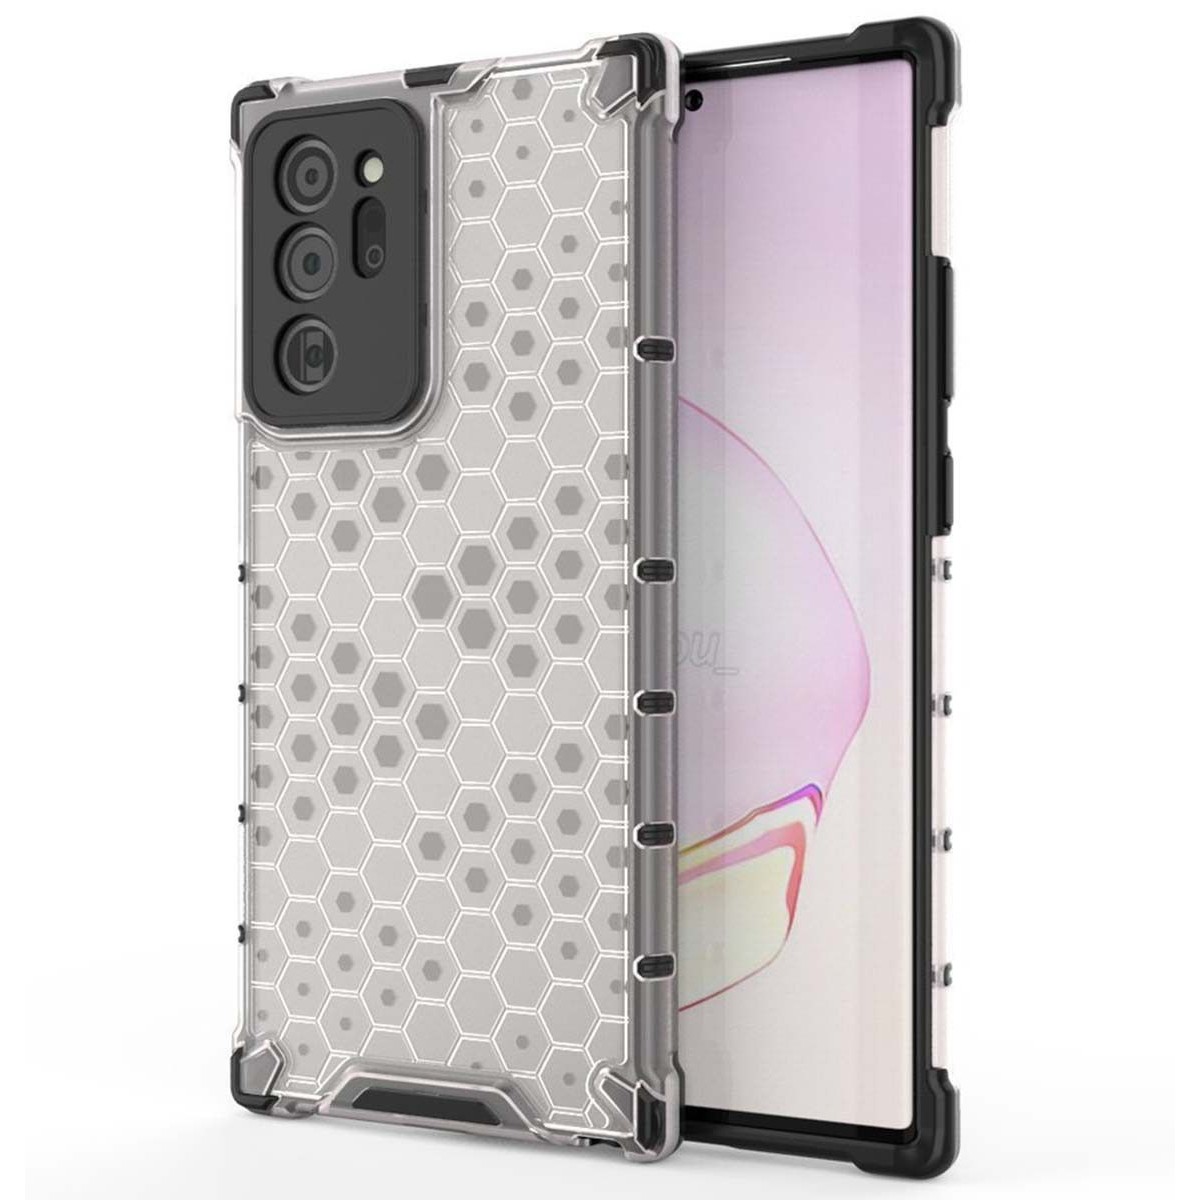 Funda Tipo Honeycomb Armor (Pc+Tpu) Transparente para Samsung Galaxy Note 20